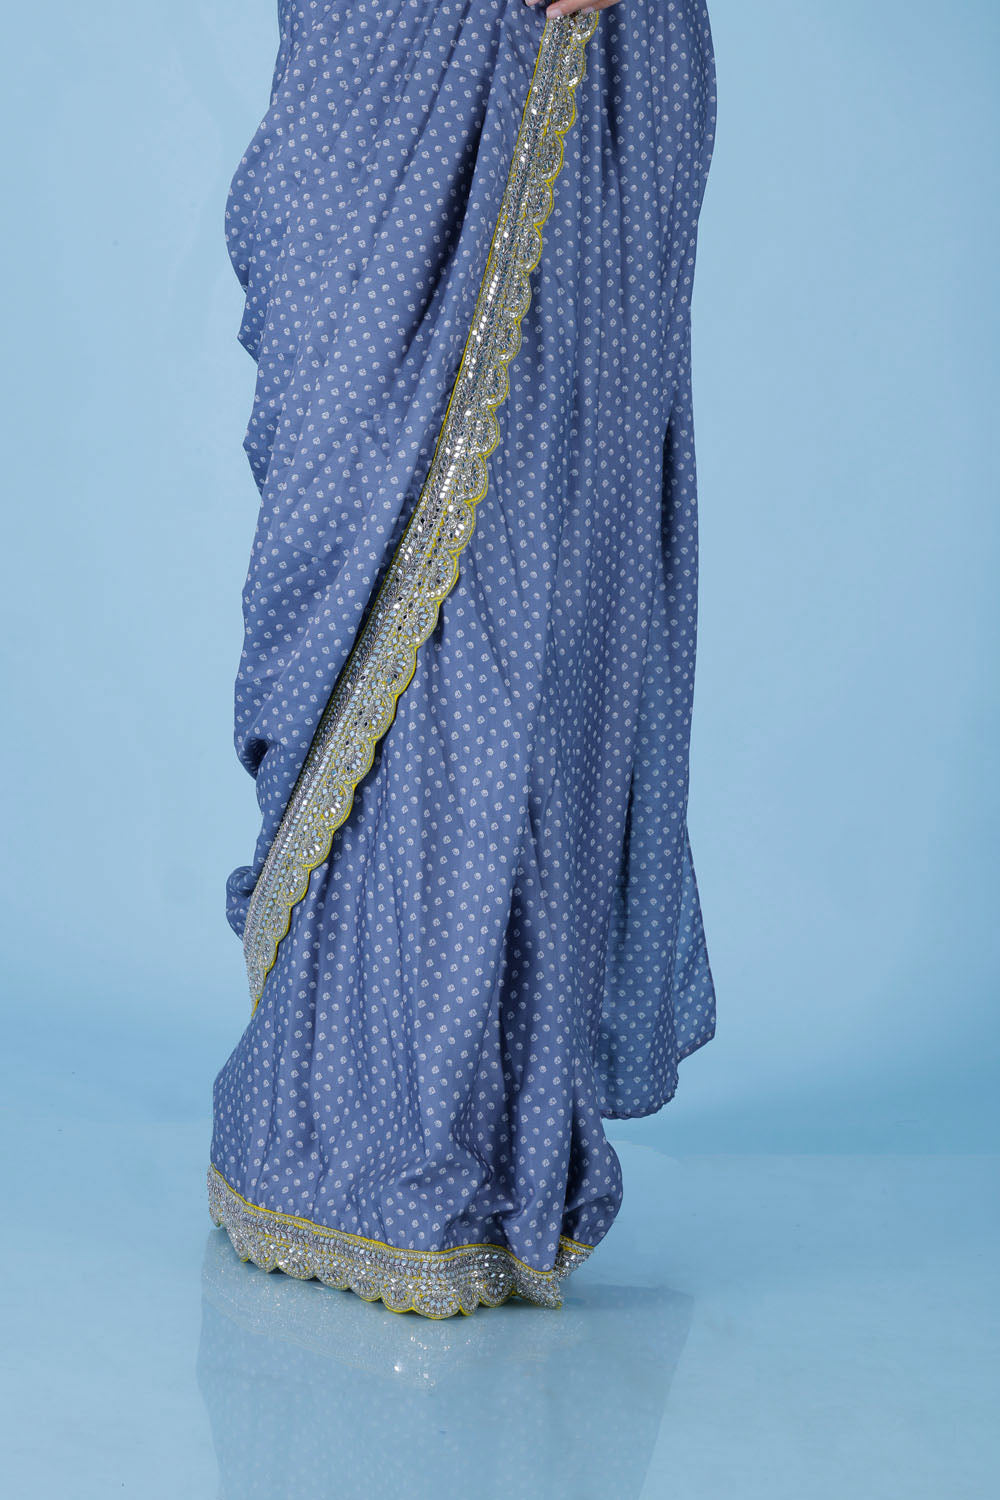 SIENNA - Jacket Style Draped Saree